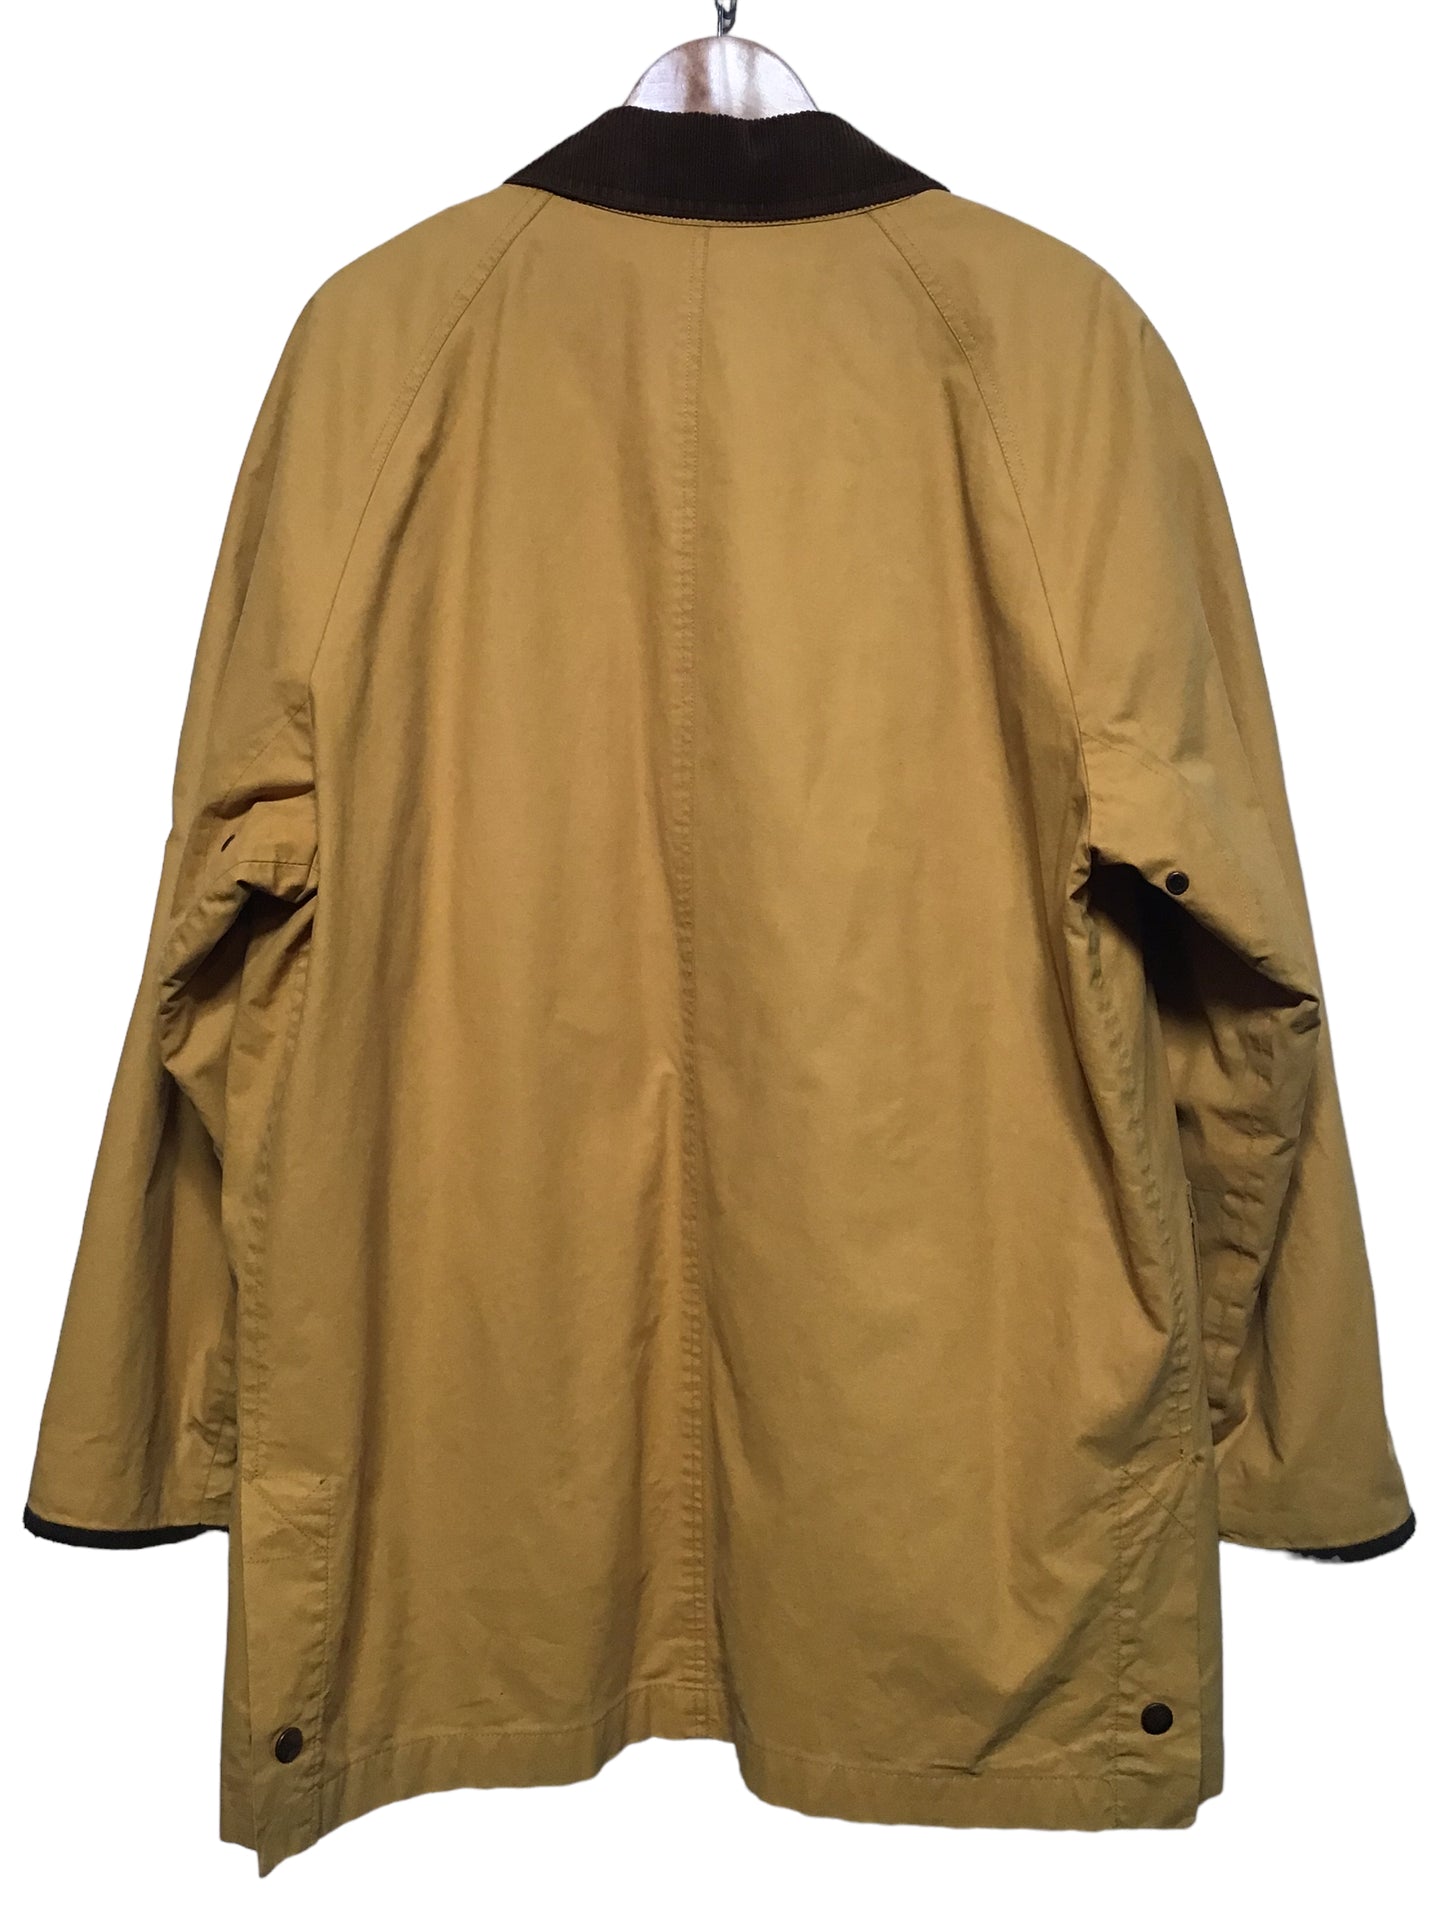 Burberry Winter Jacket (Size XL)